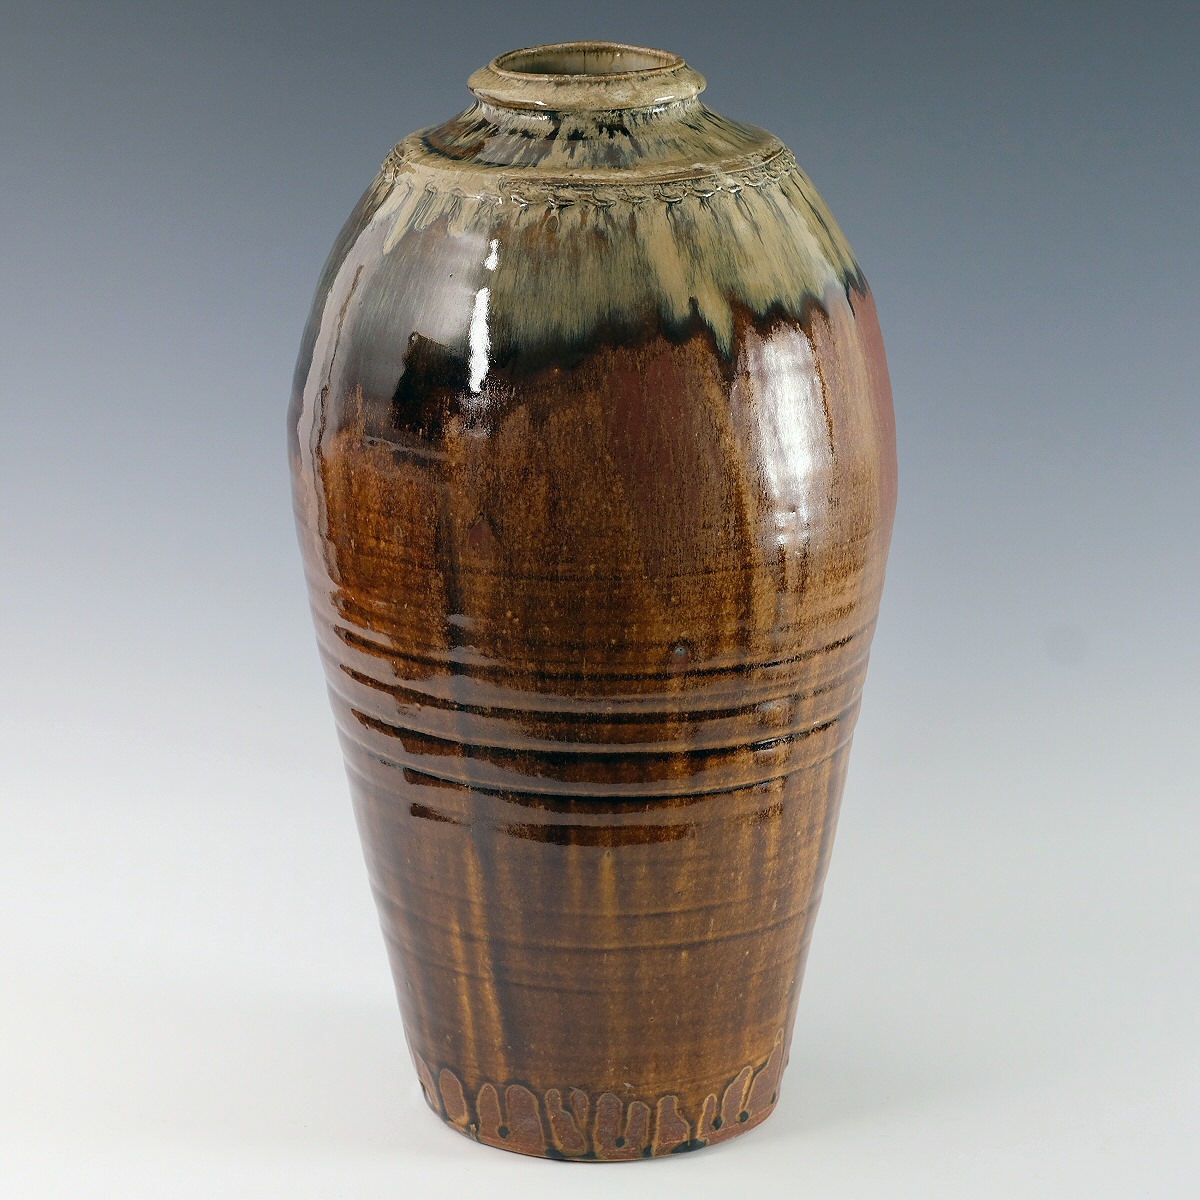 Mike Dodd - Vase